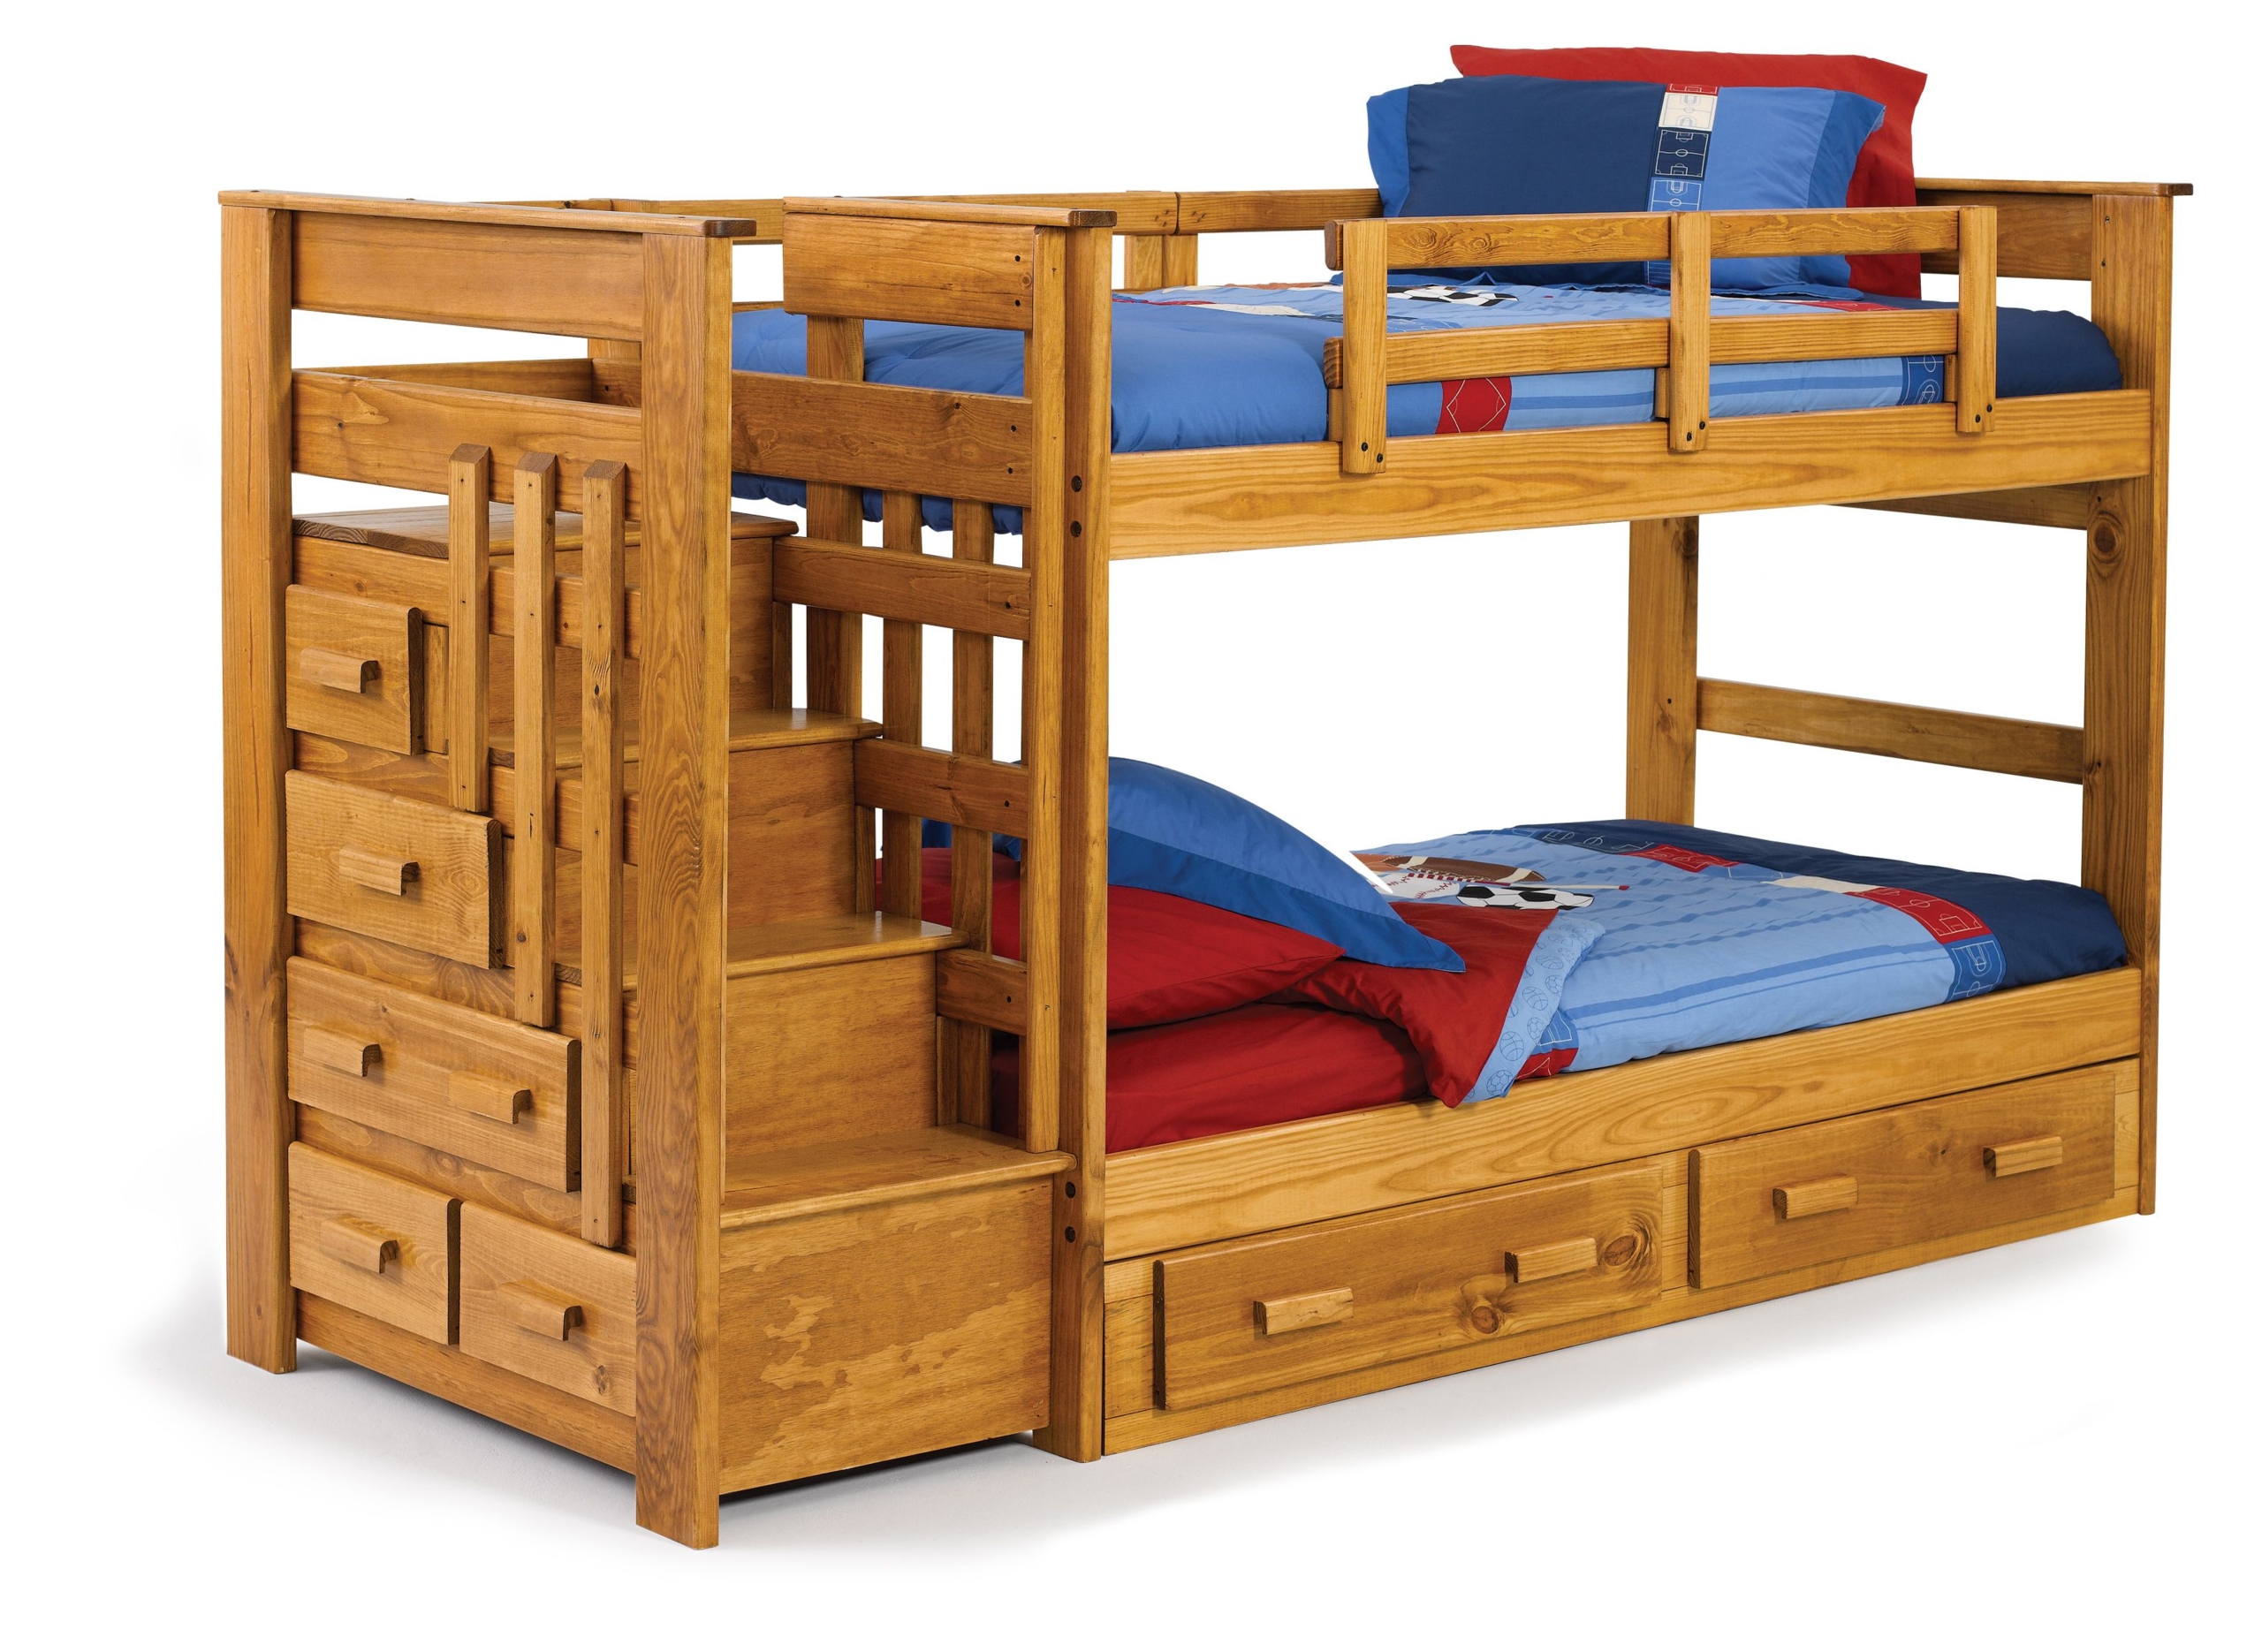 Solid oak bunk beds